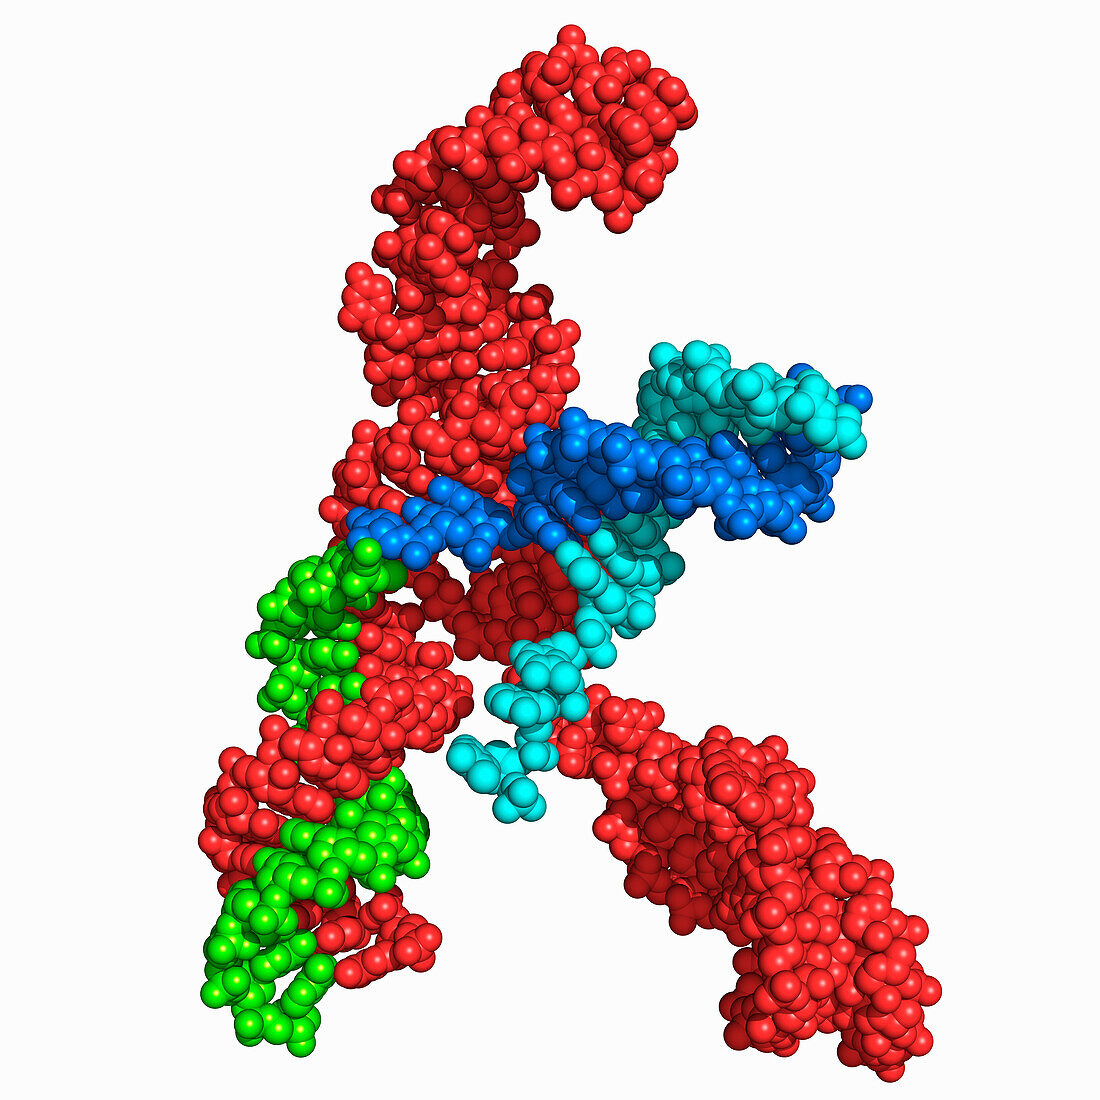 CRISPR/Cas9 target DNA binding, molecular model